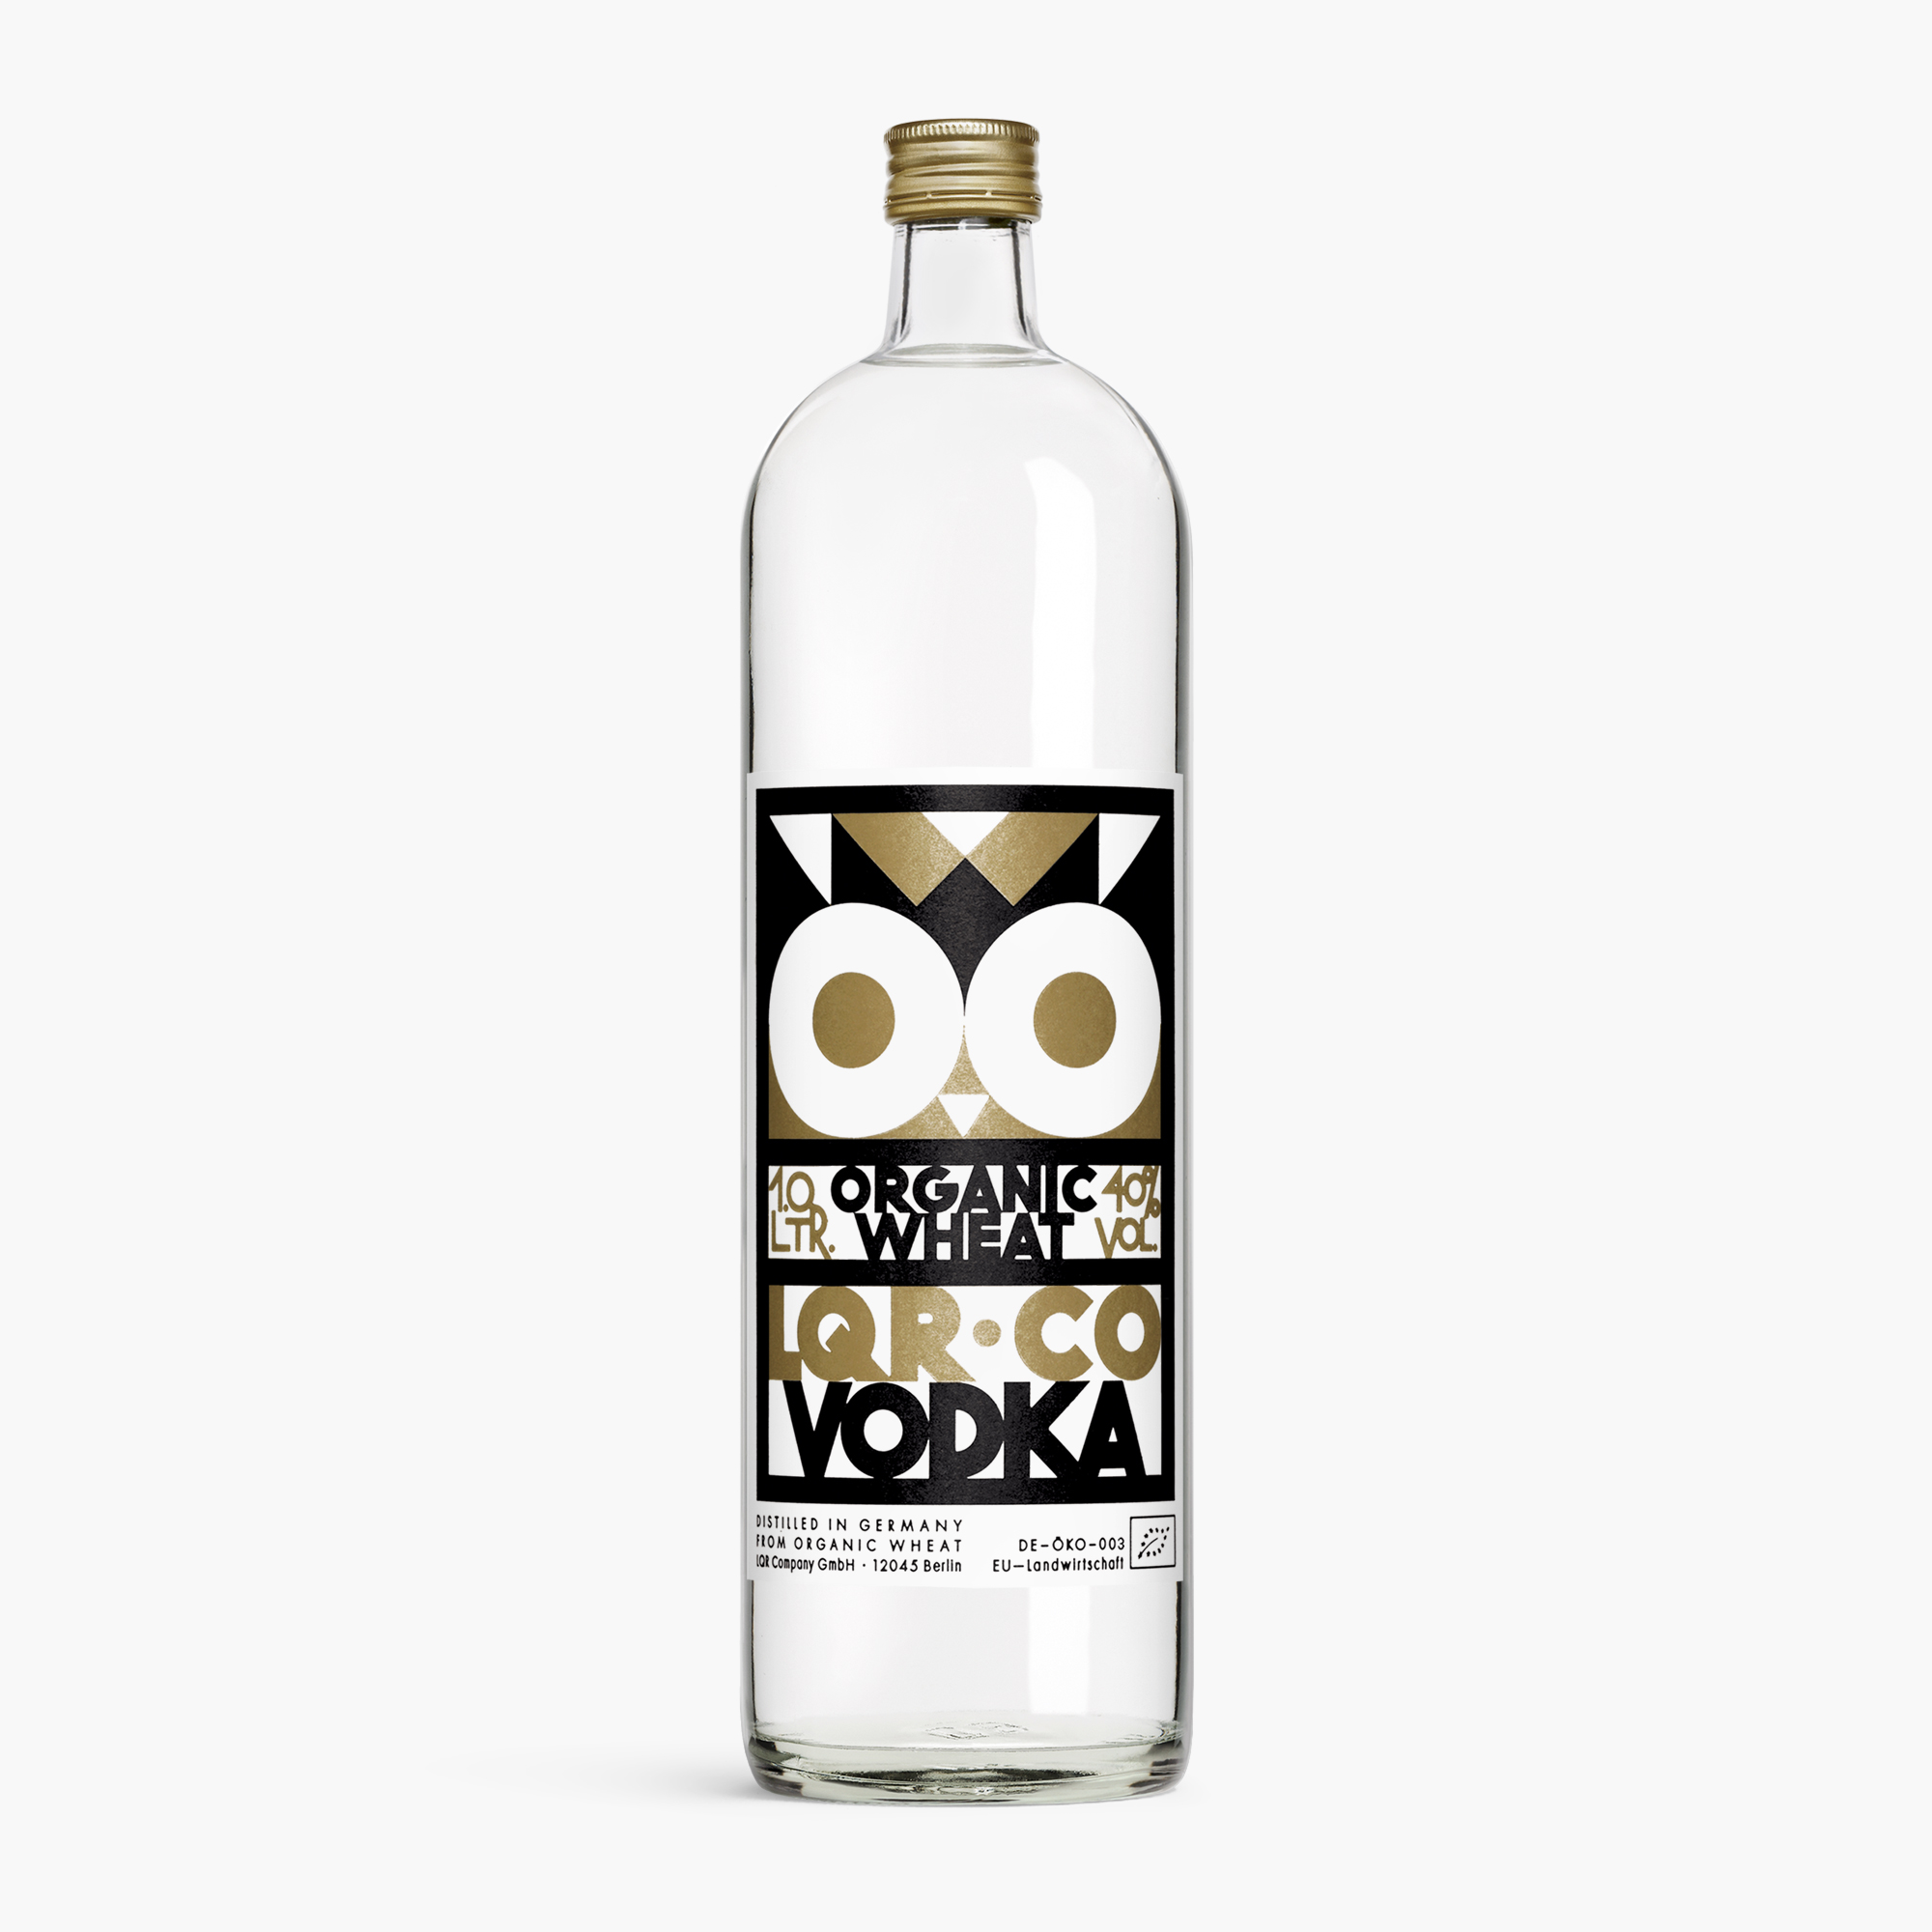 LQR Co. Organic Vodka